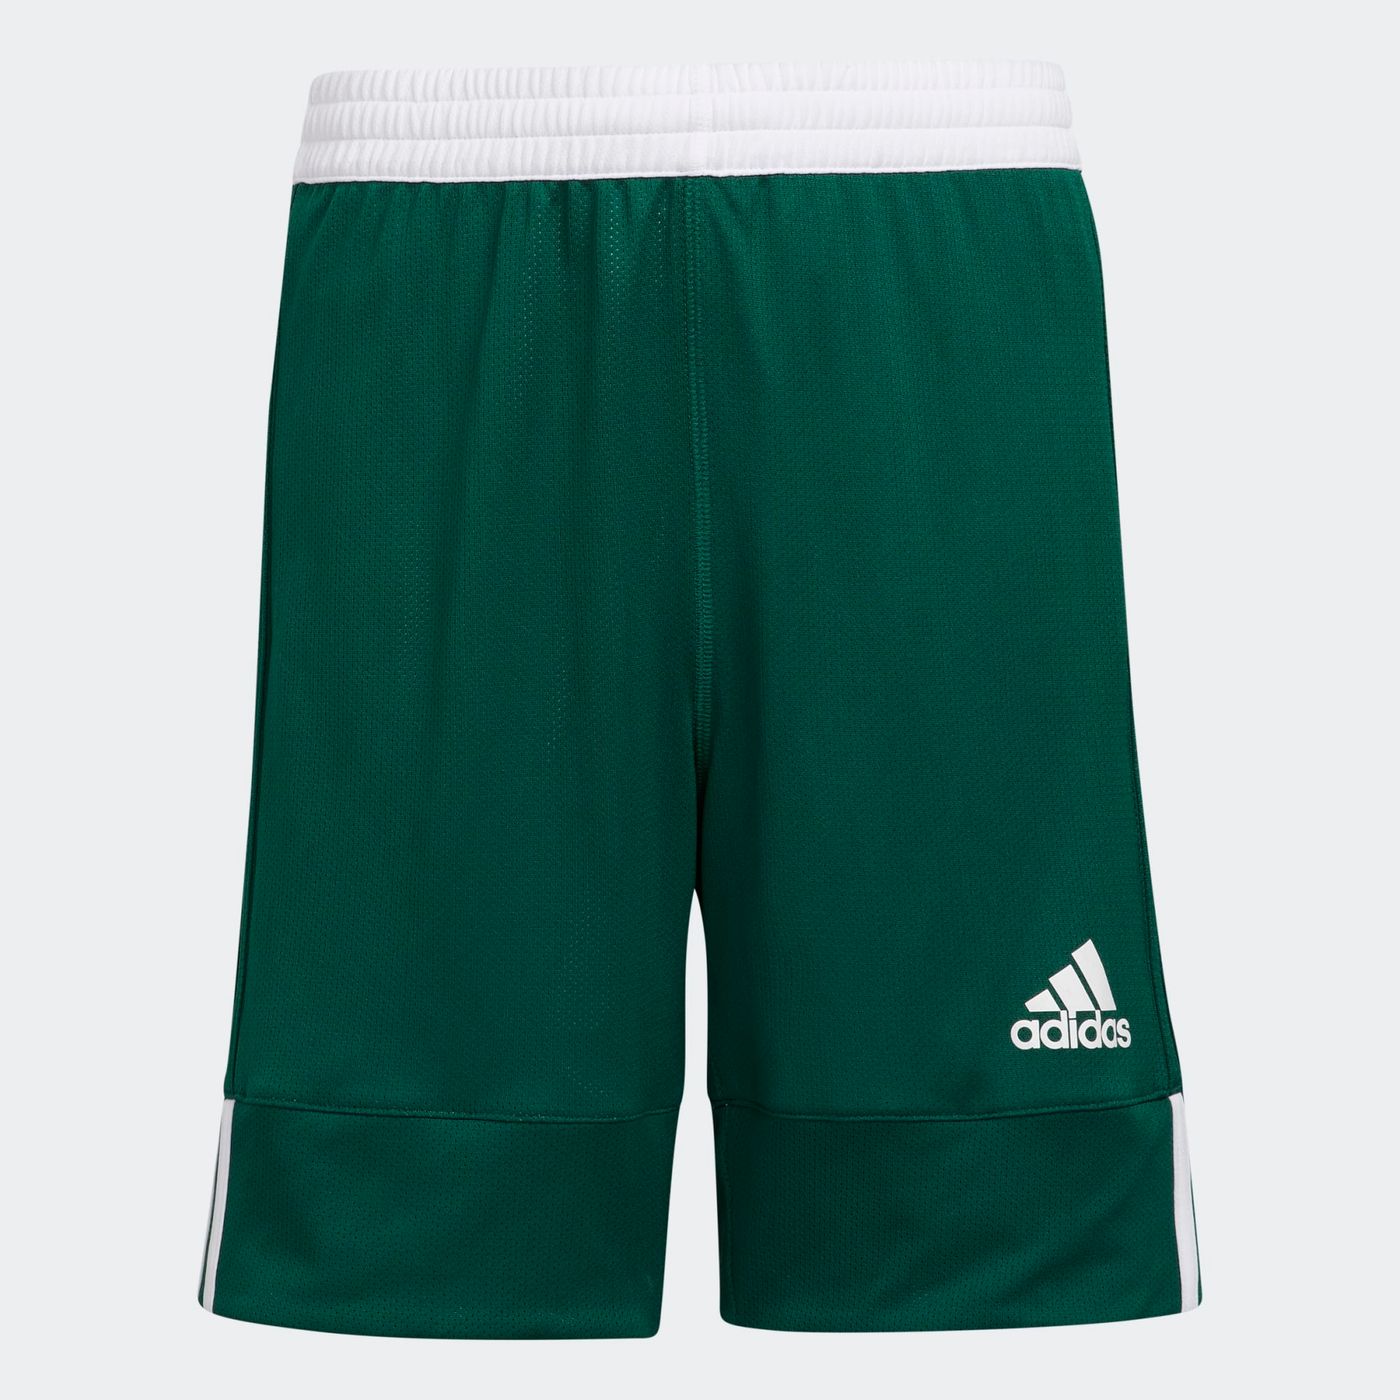 DY6623 - Shorts - Adidas